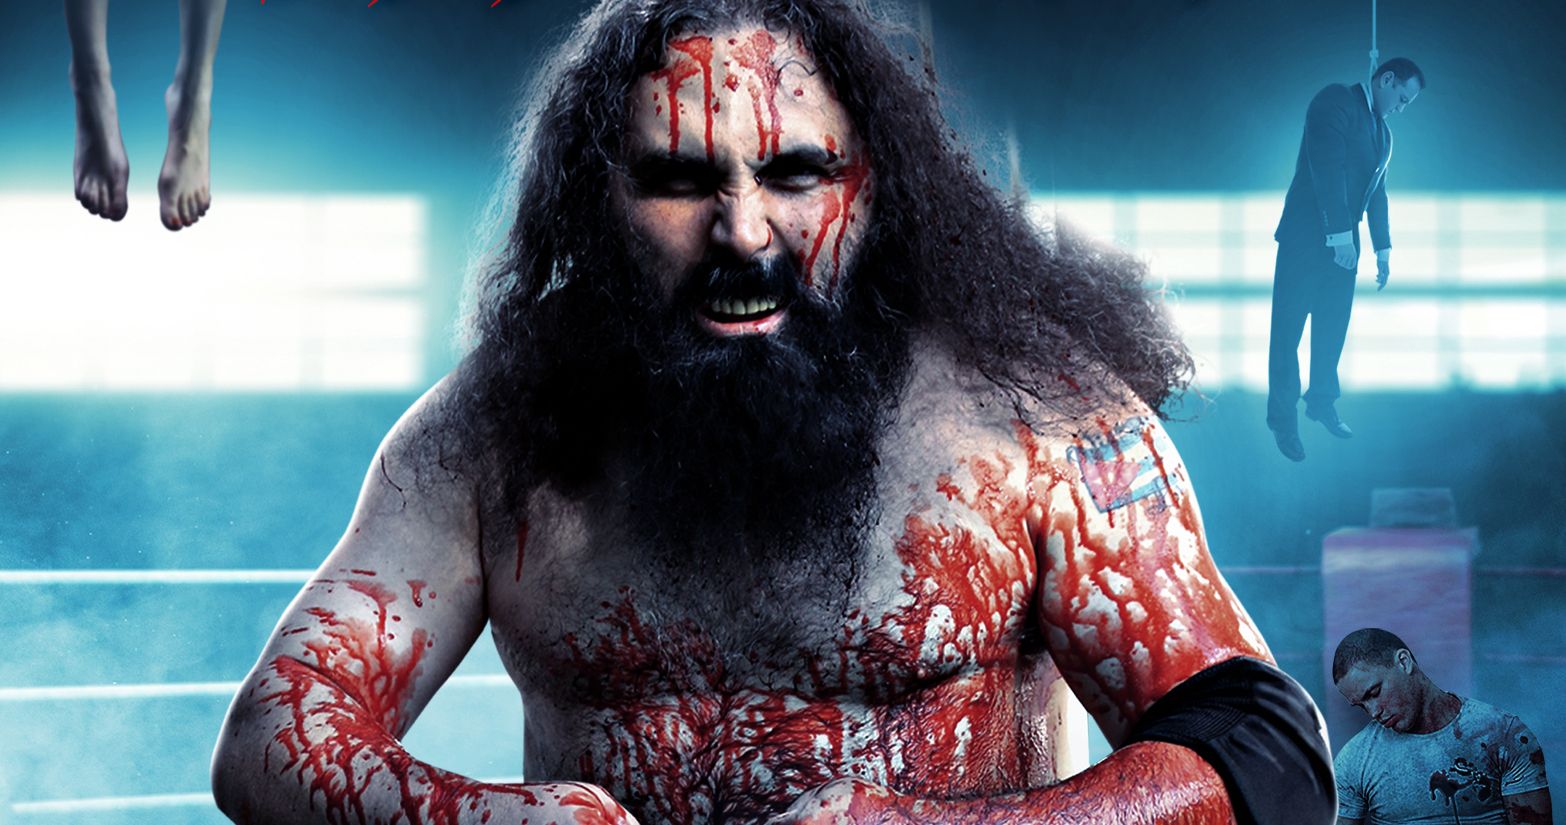 WrestleMassacre Trailer Sends One Wannabe Wrestler on a Blood Soaked Rampage